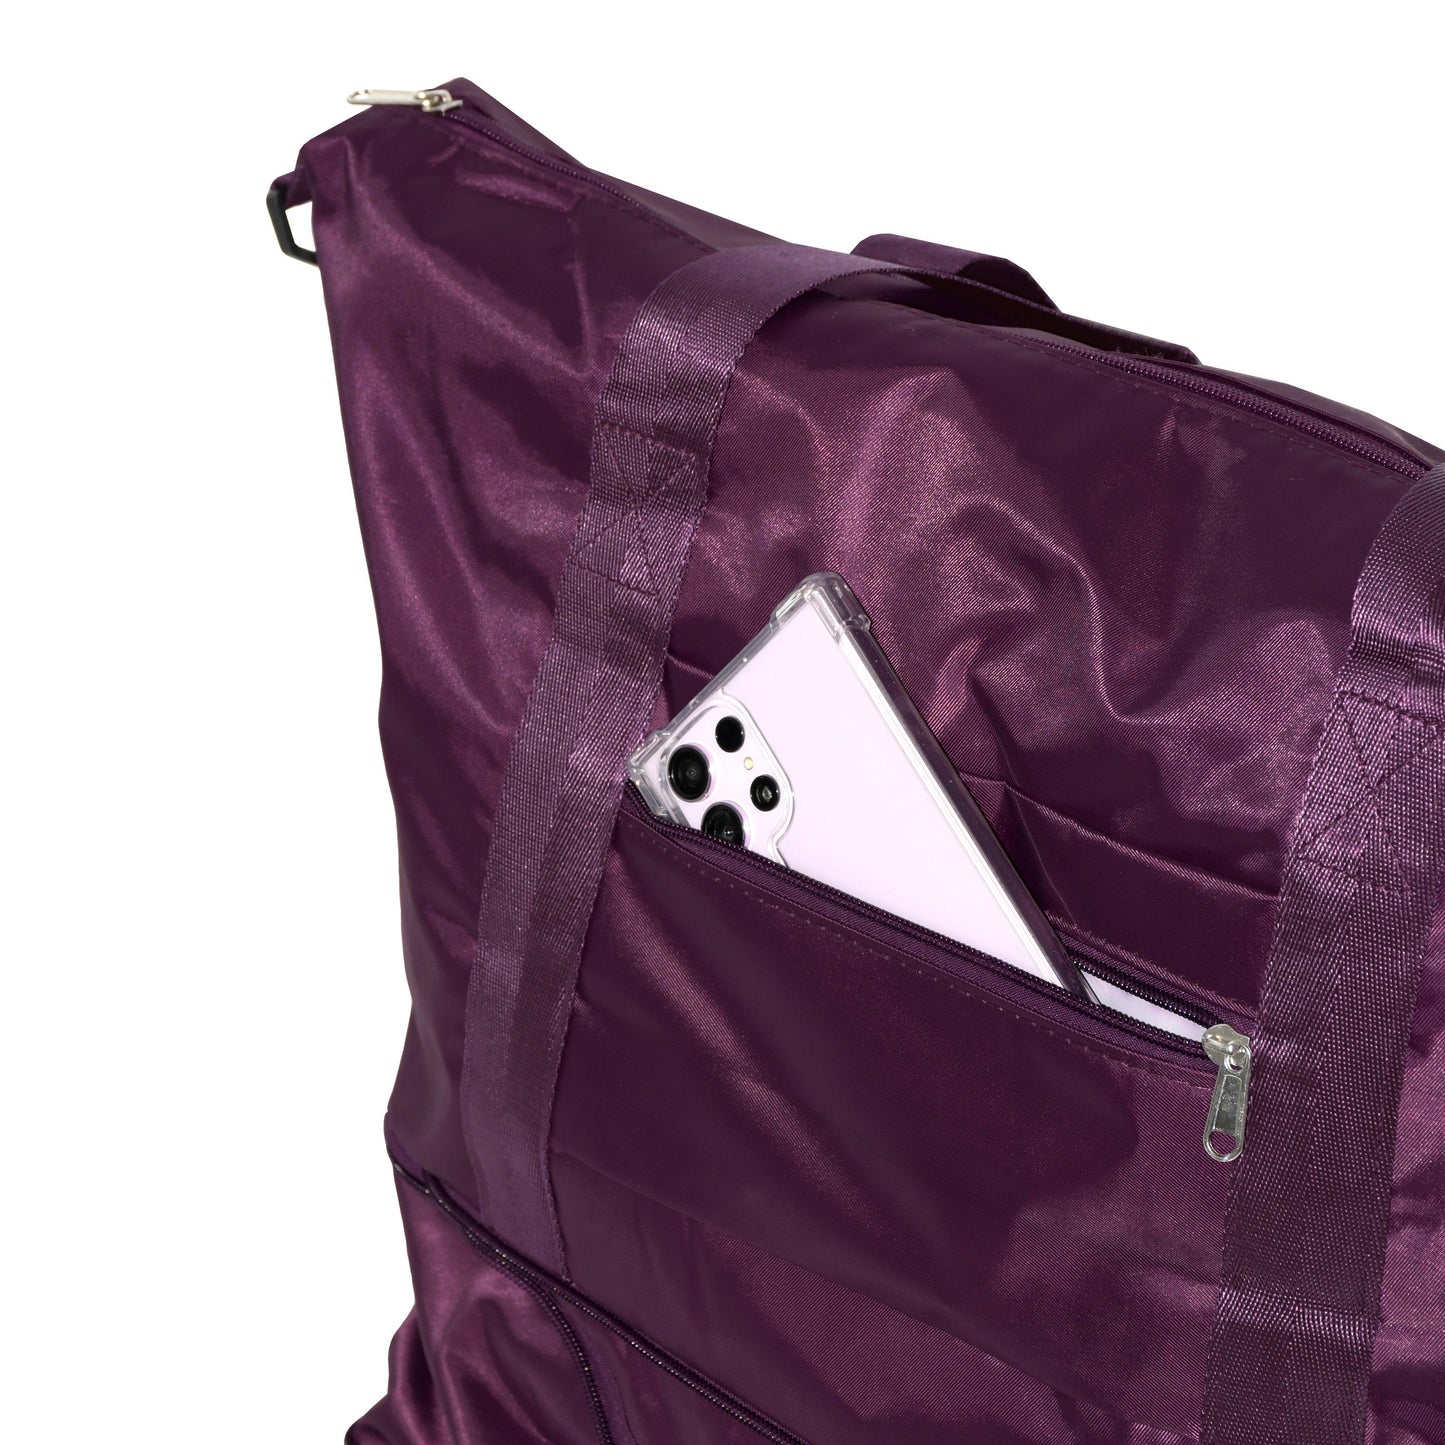 Travel Weekender Duffel Expandable Bag